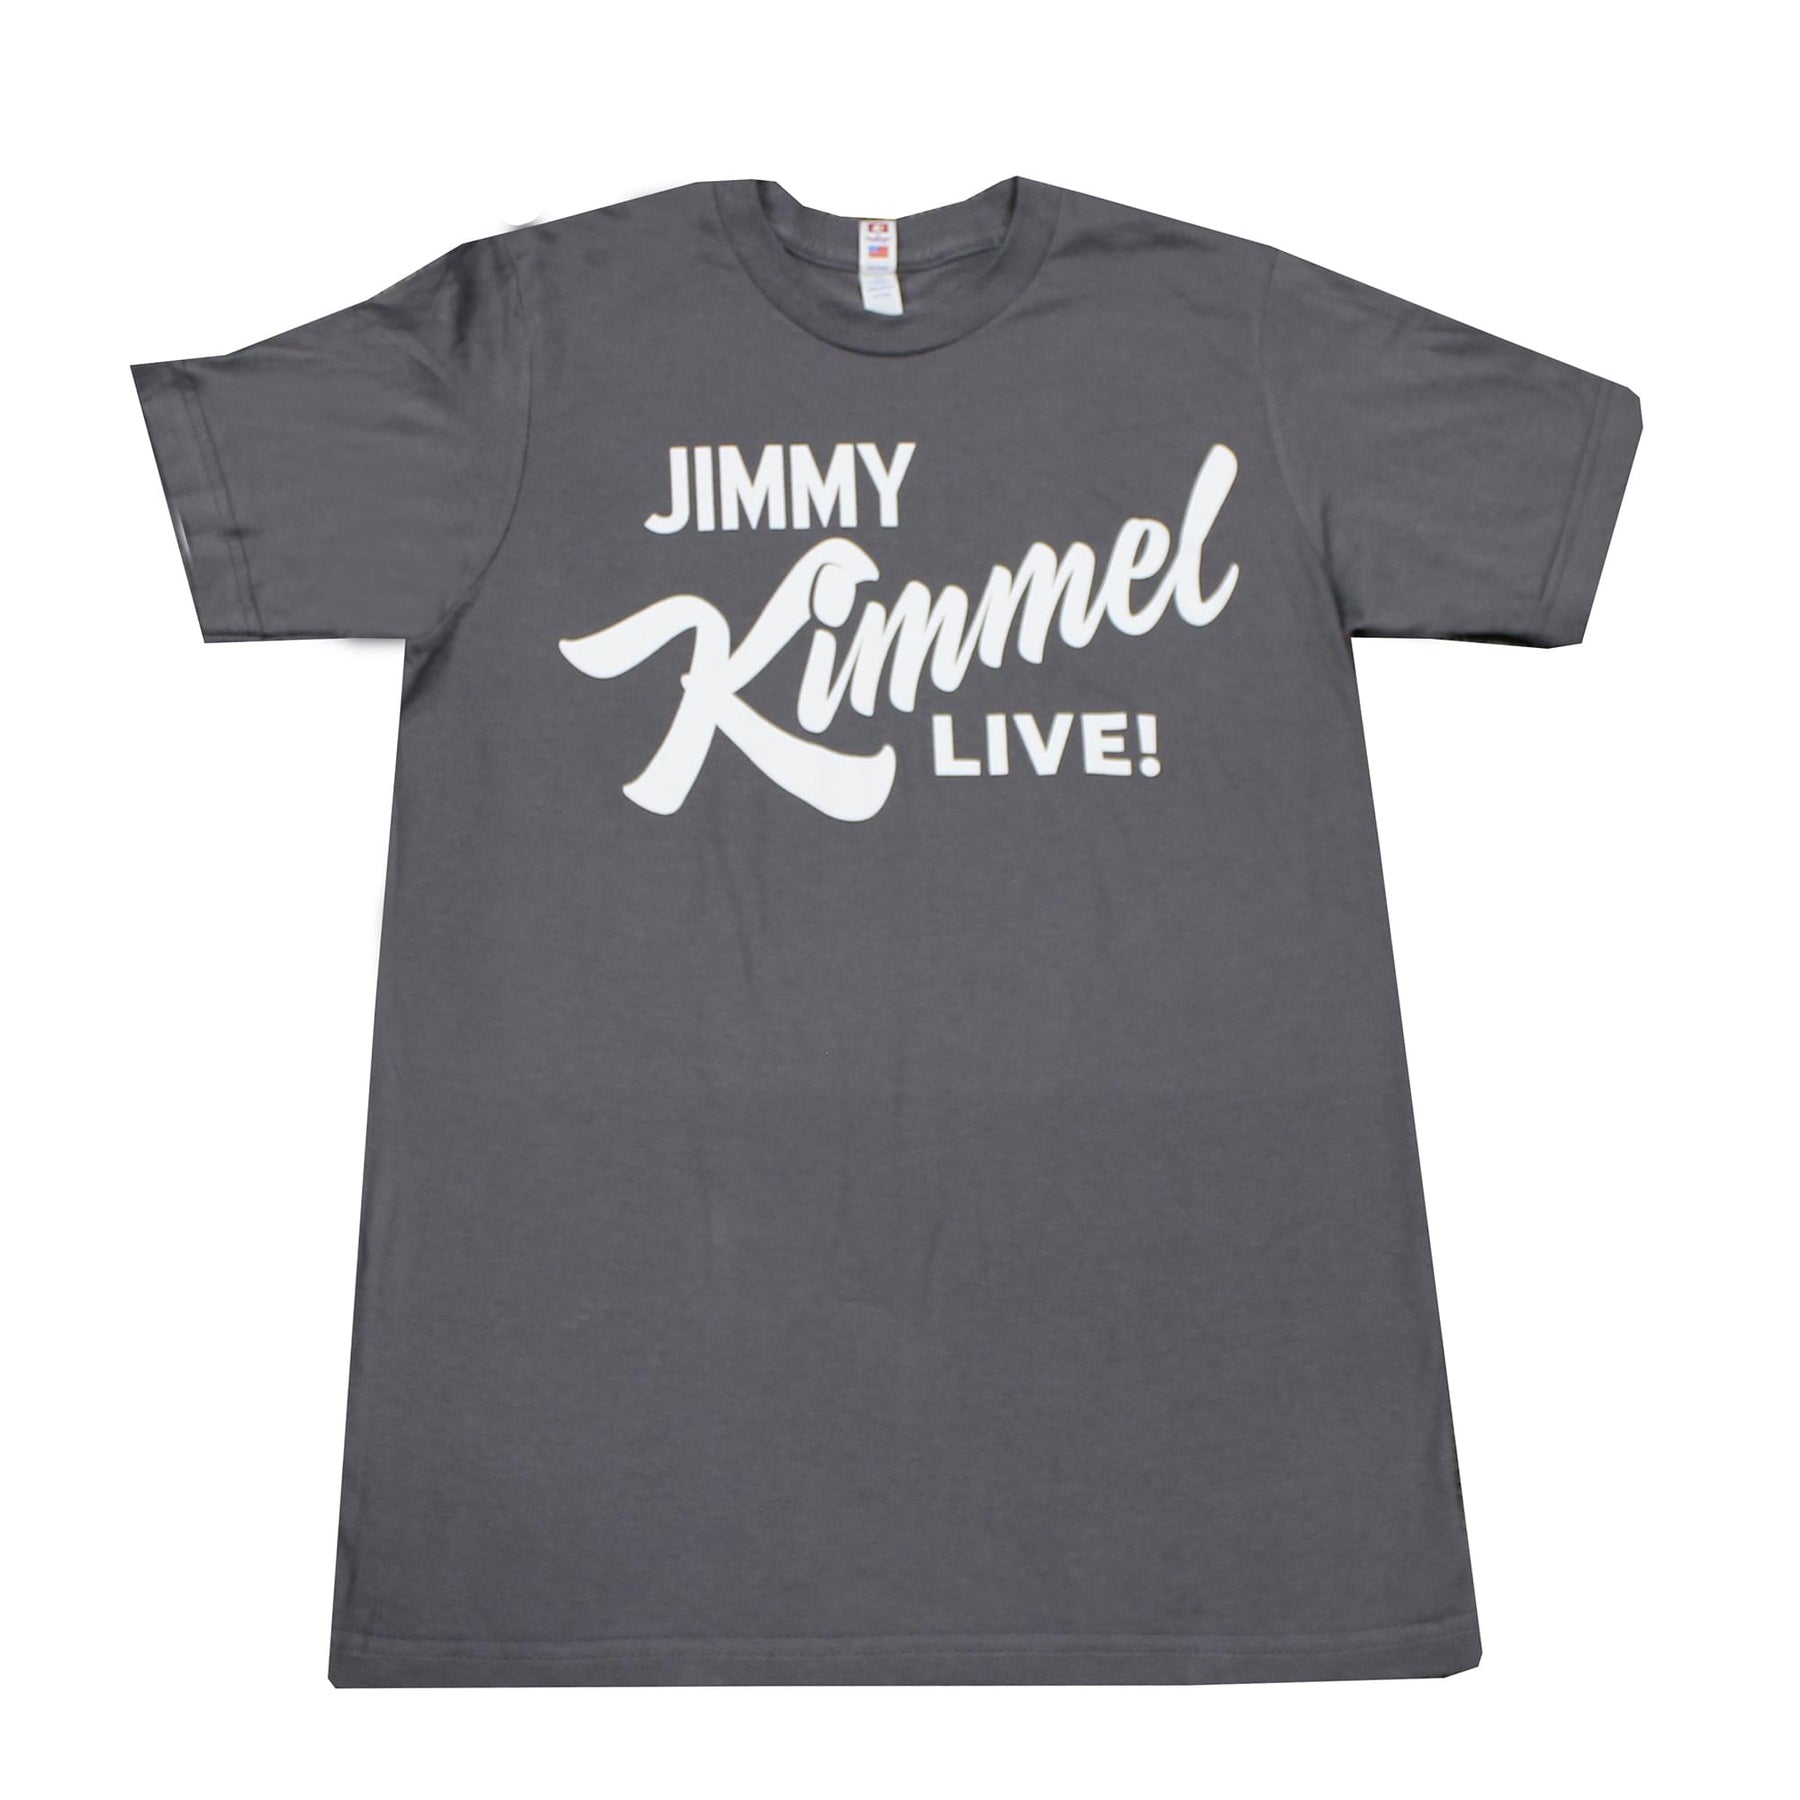 Jimmy Kimmel Live! Hollywood Charcoal Tee Shirt Adult Unisex